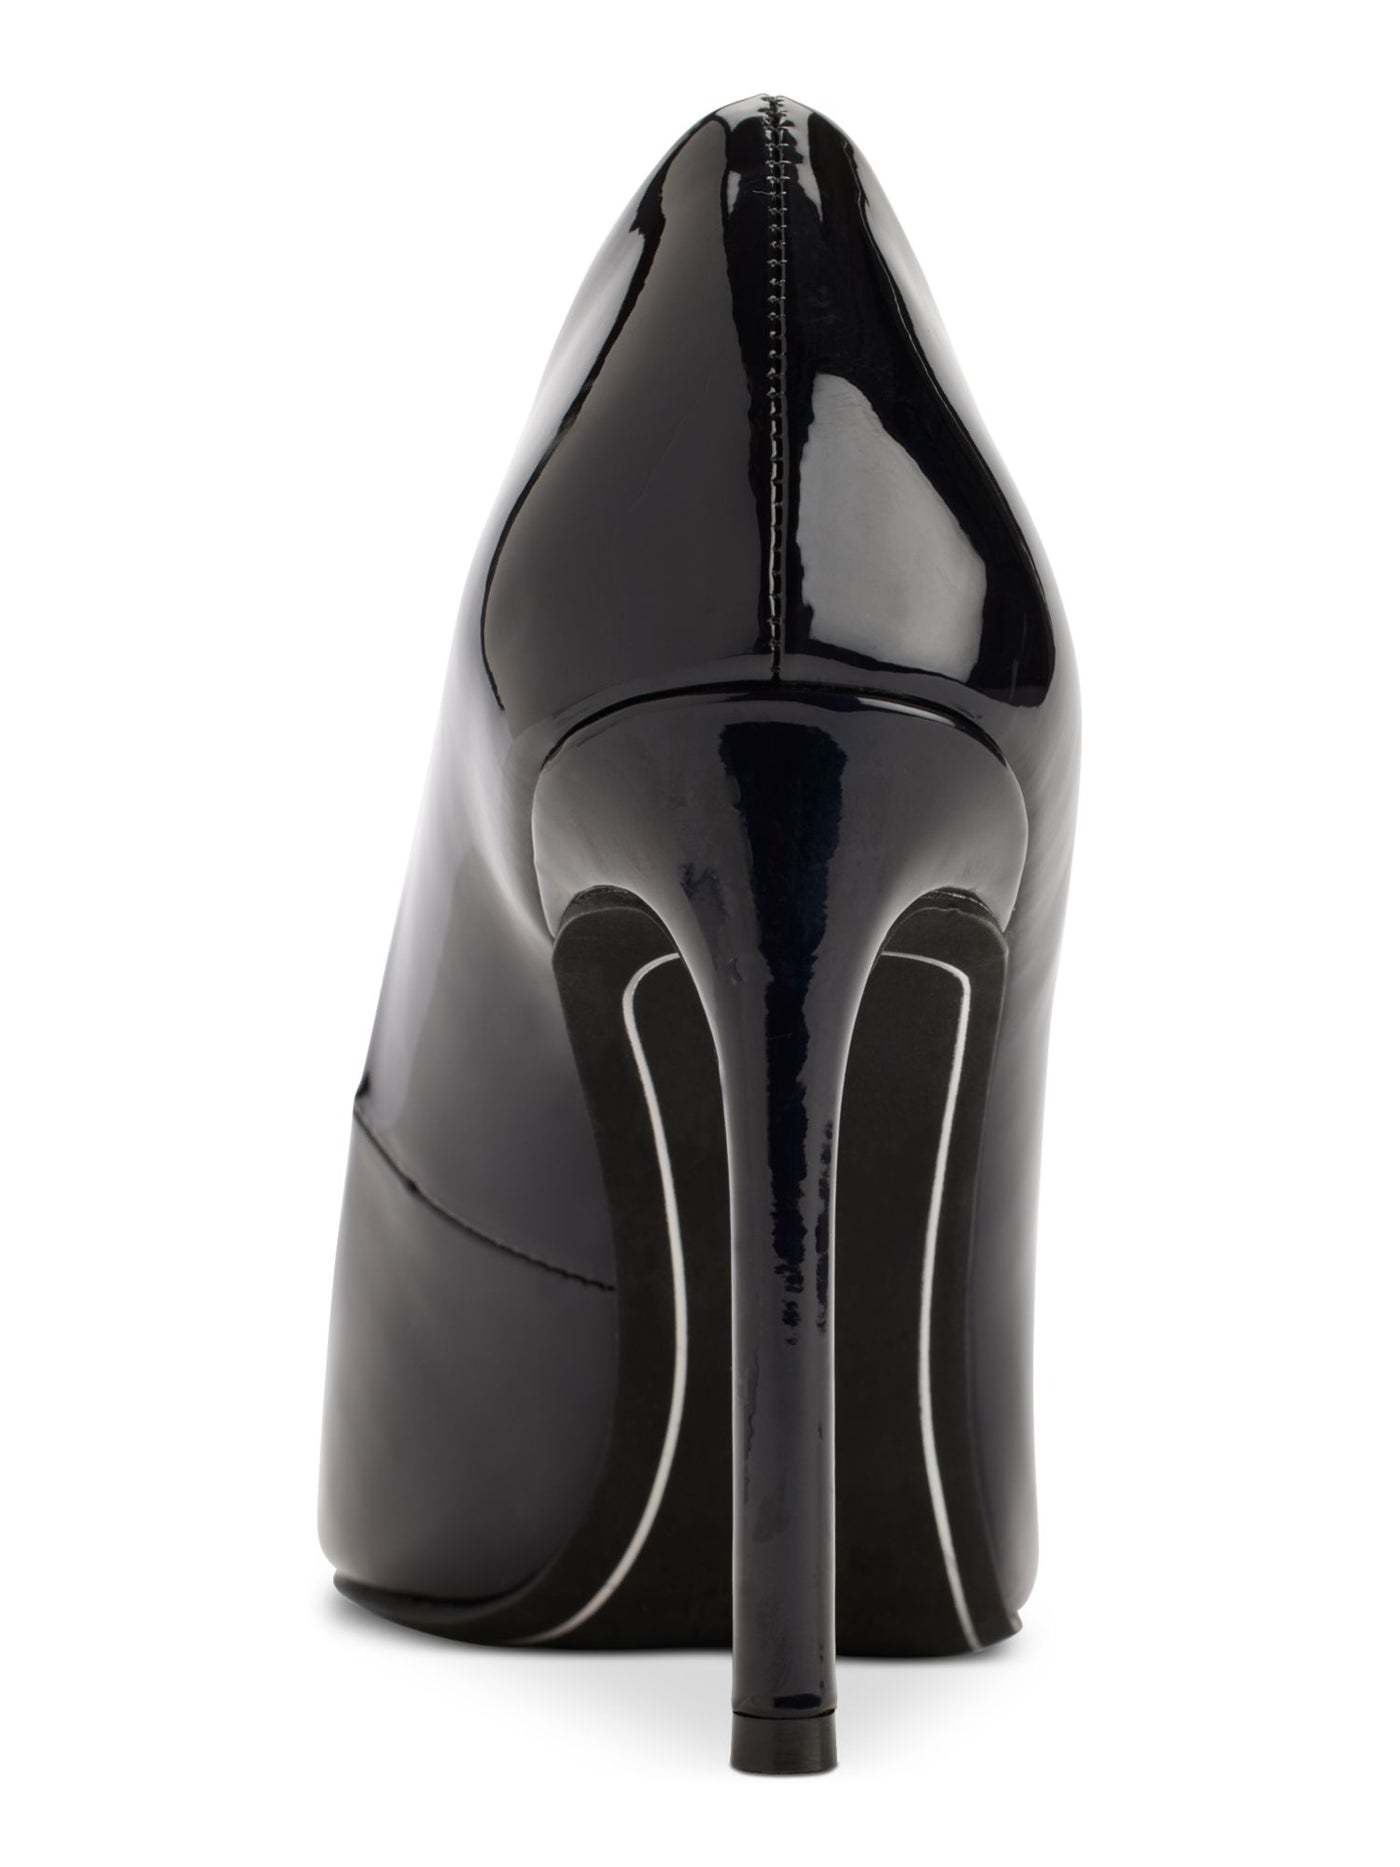 DKNY Womens Black Padded Mabi Pointed Toe Stiletto Slip On Dress Pumps Shoes 5